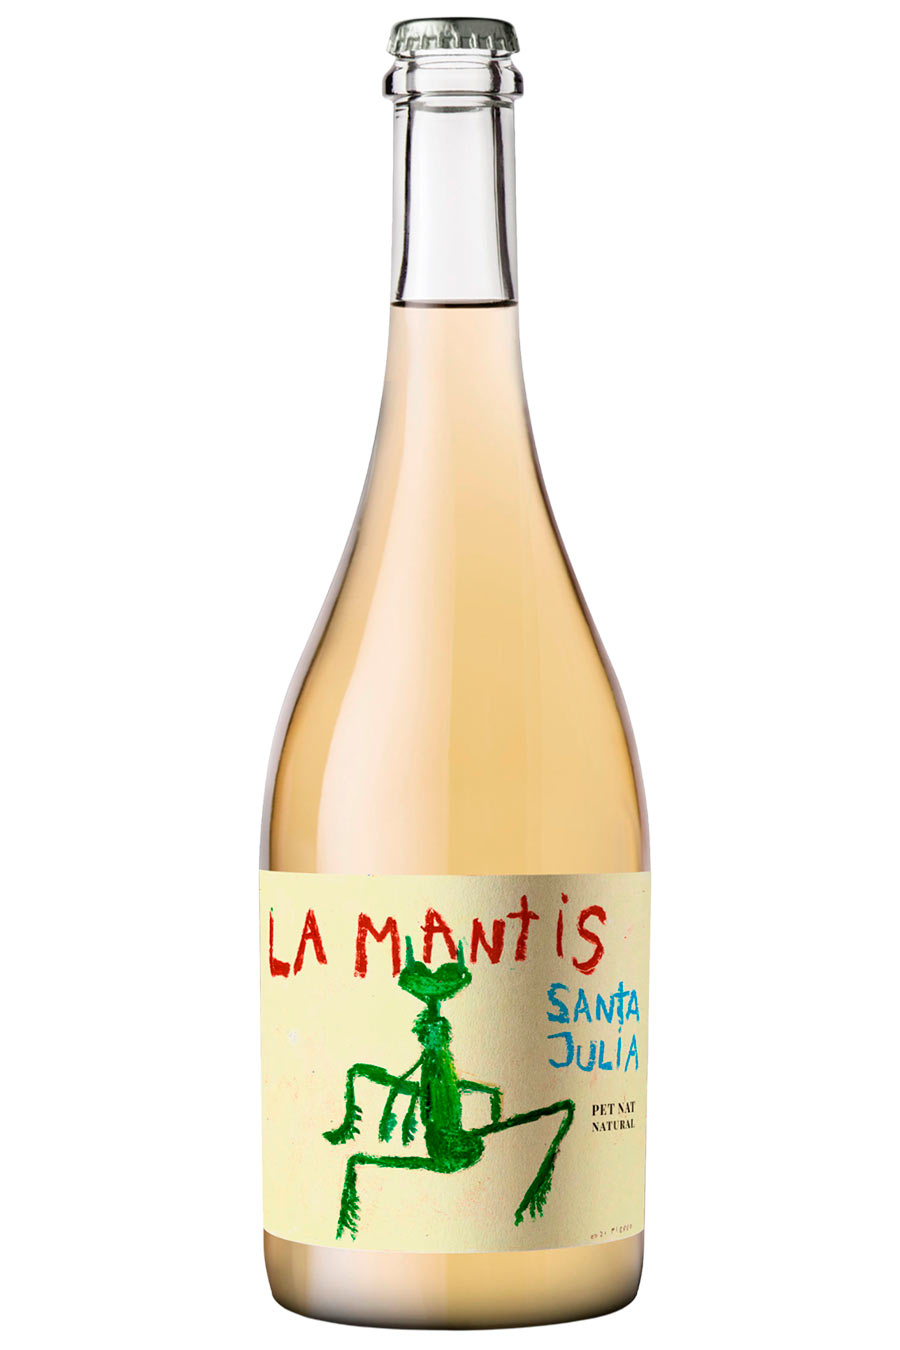 Santa Julia La Mantis Chardonnay Pet-Nat Natural